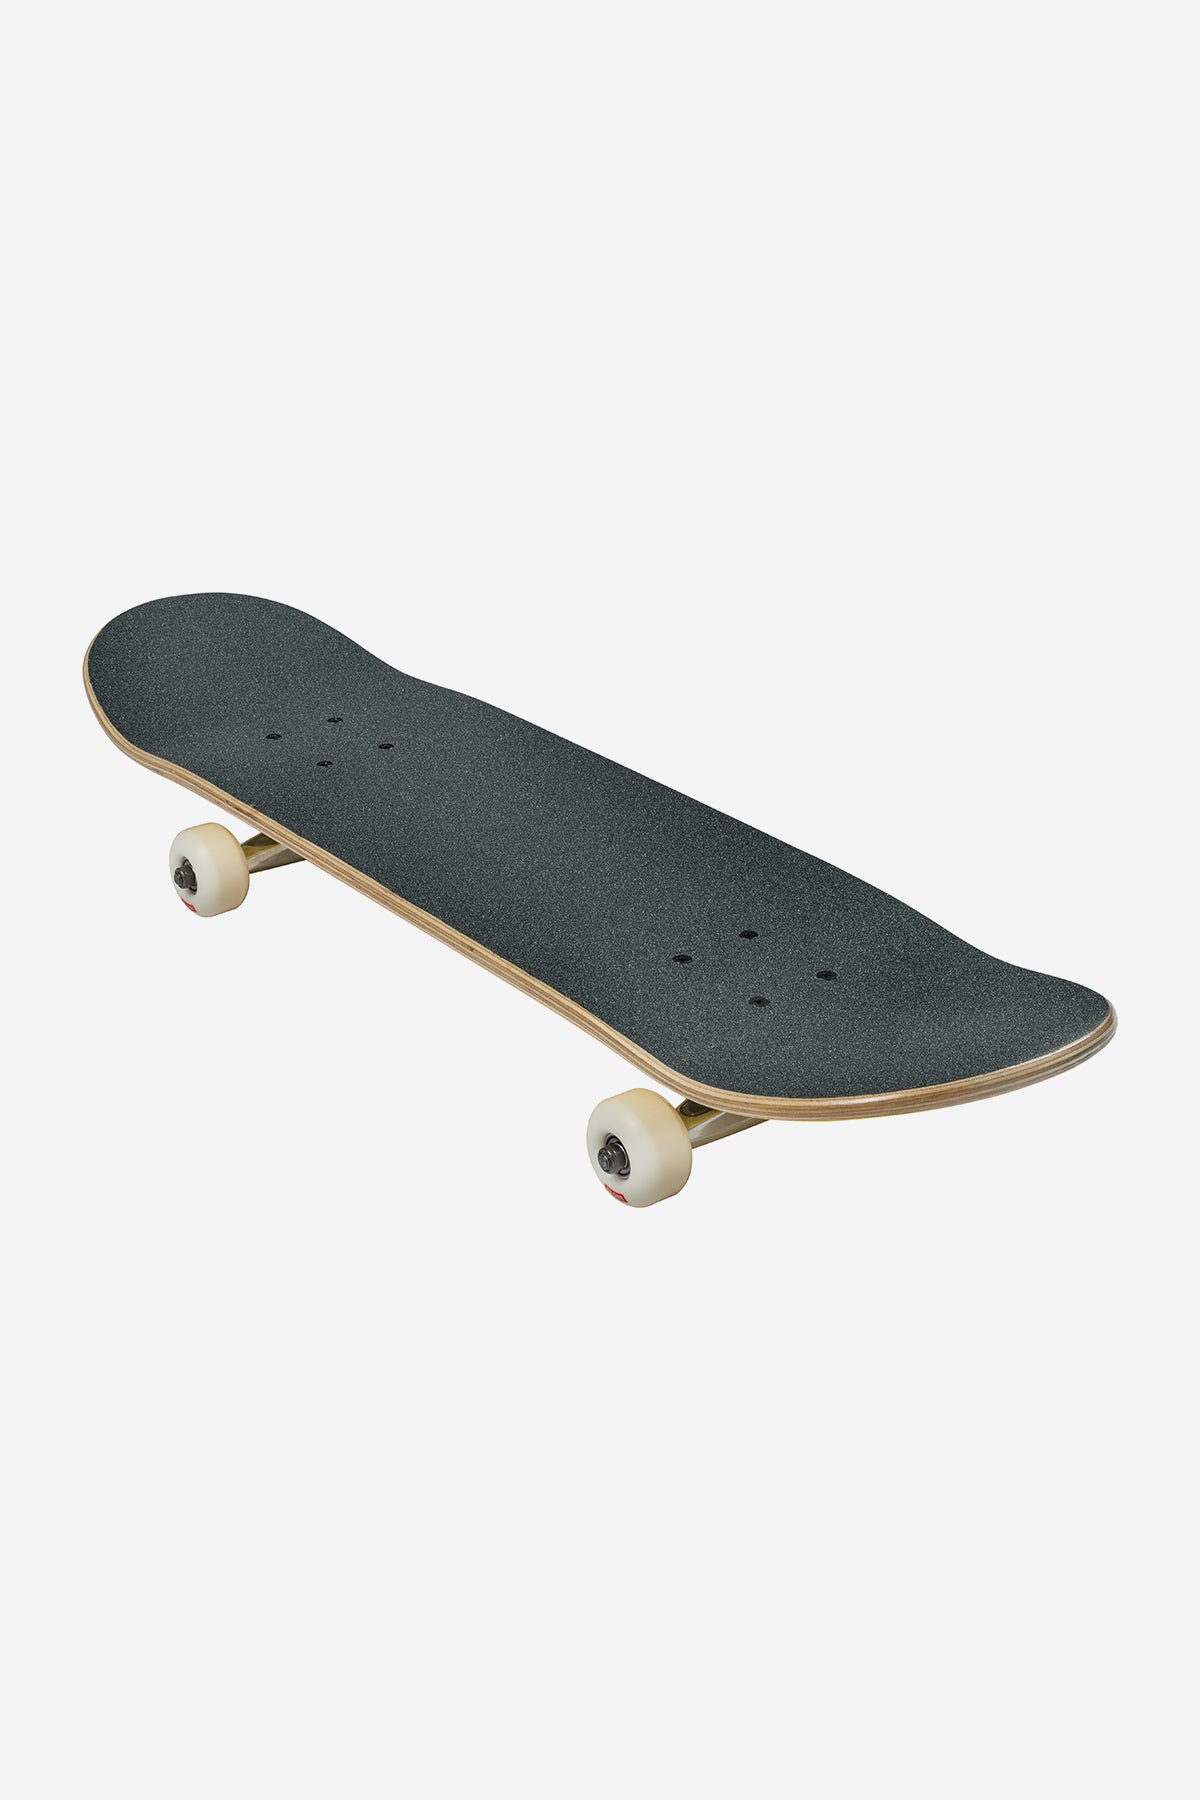 Goodstock - Red - 7.75" Complete Skateboard